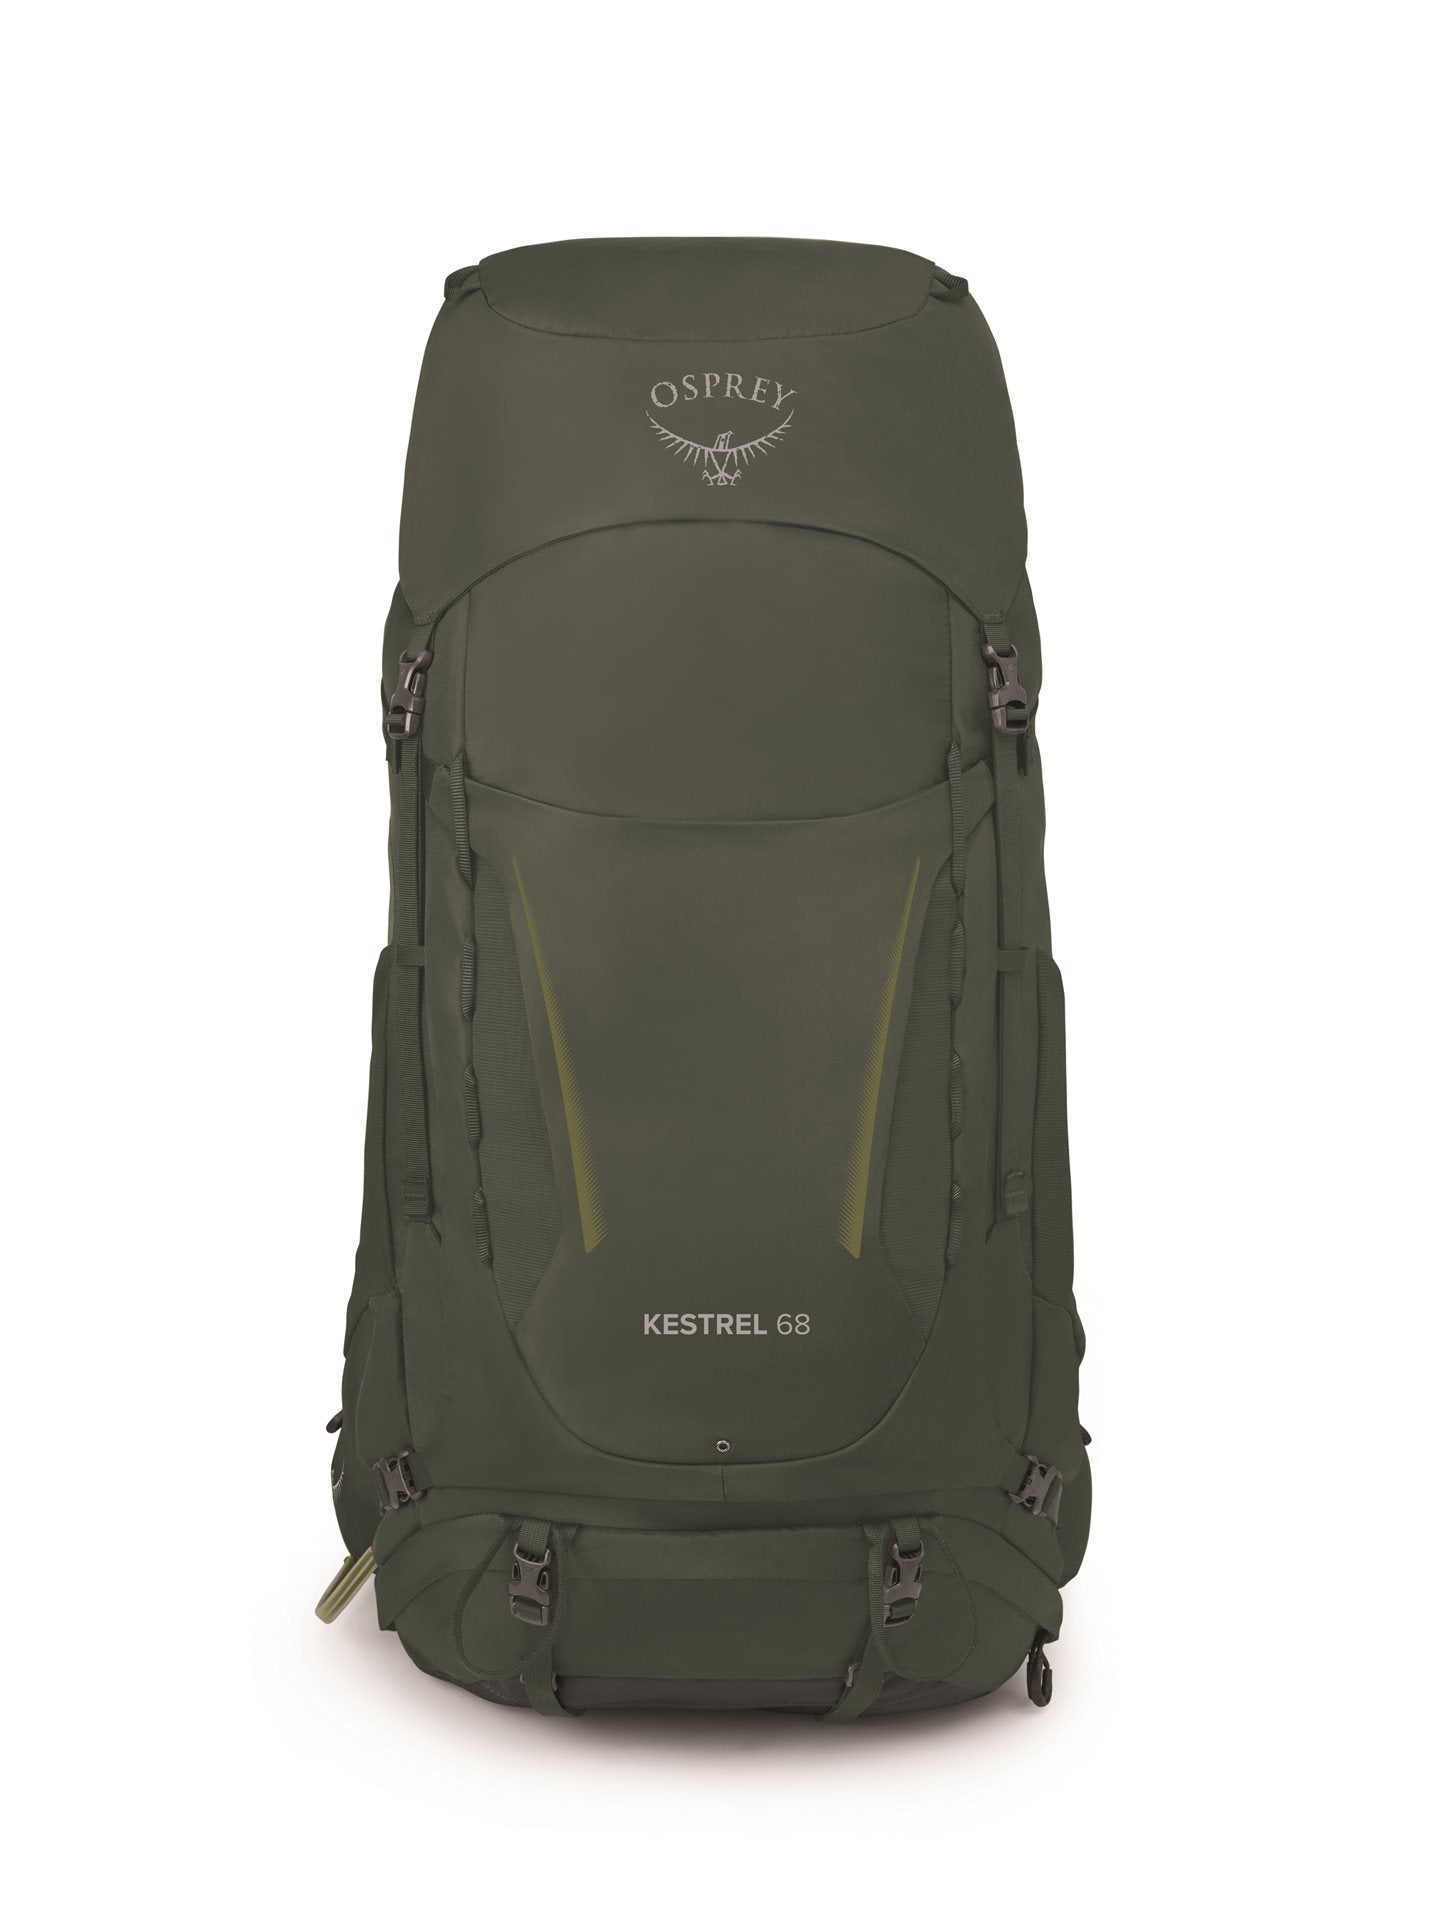 Osprey Kestrel Rugzak 68 Bonsai Green Backpack - Reisartikelen-nl